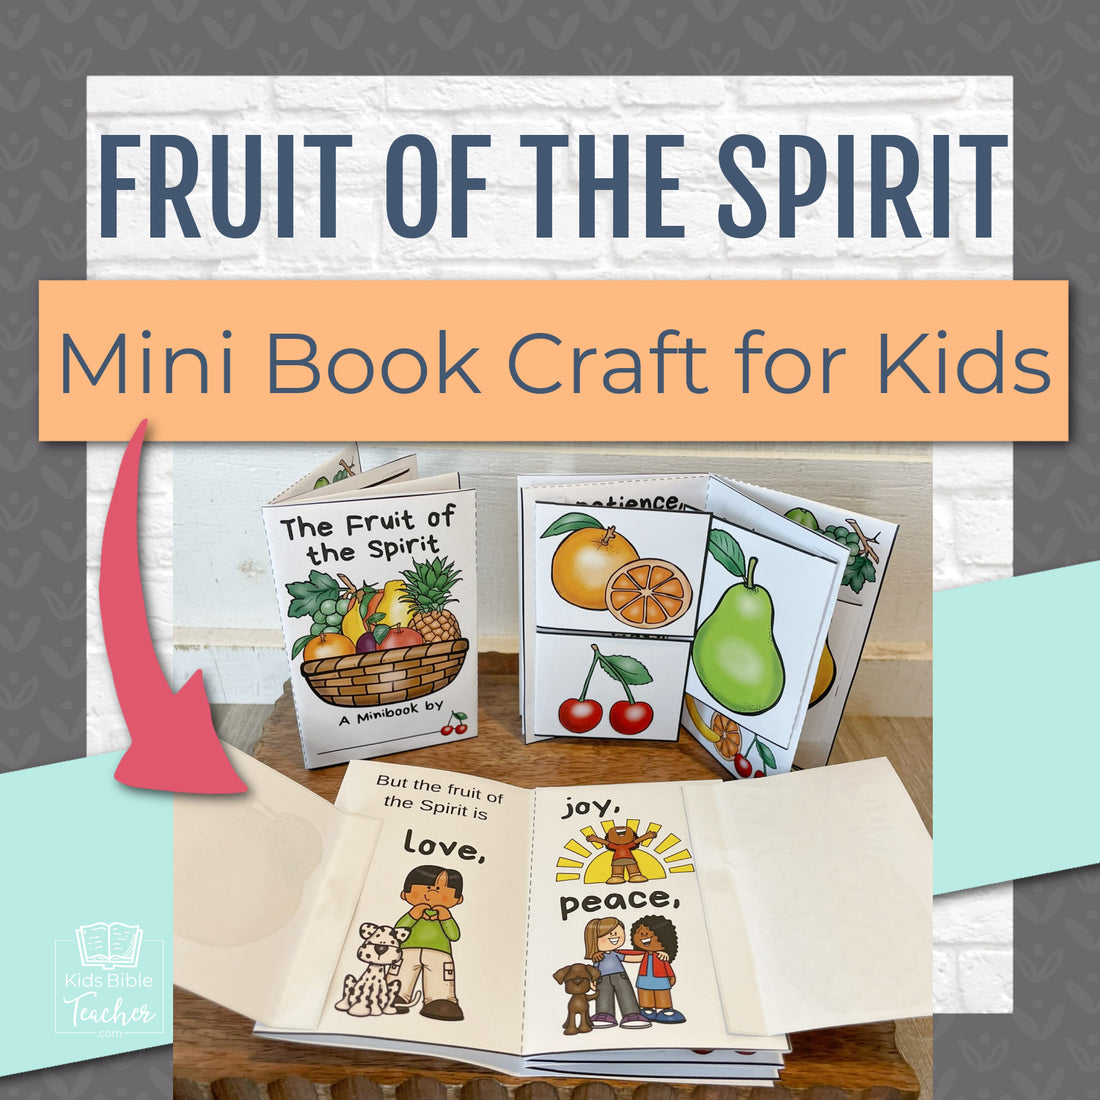 Fruit of the Spirit Mini Book Craft for Kids featuring Galatians 5:22-23